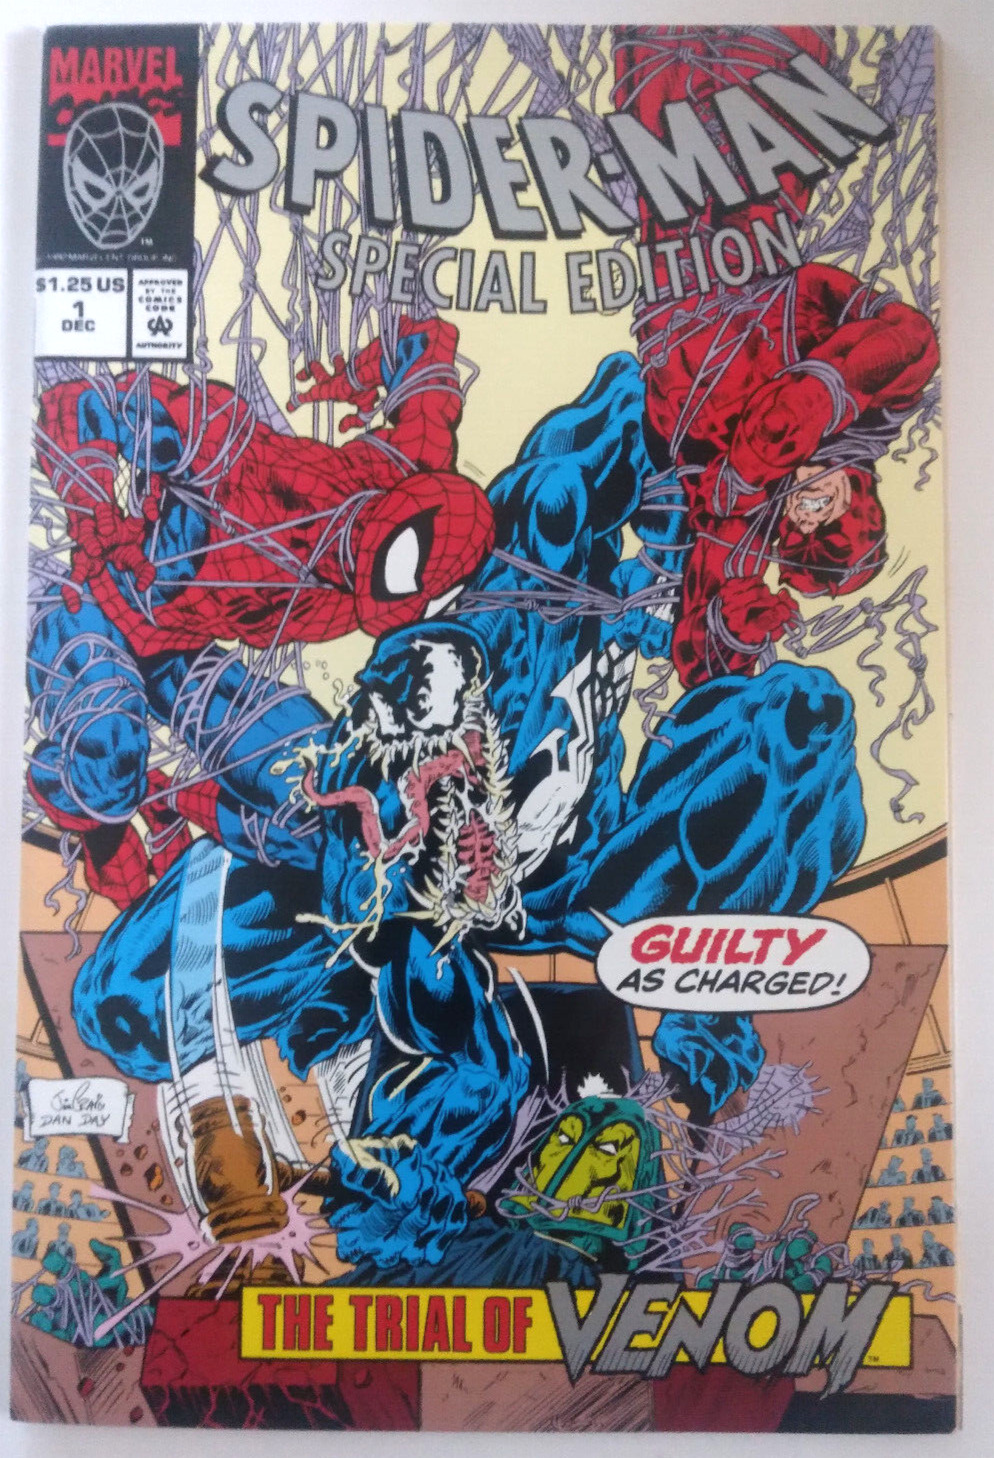 Spider-Man Special Edition #1 The Trial Of Venom (1992 Marvel Comics)